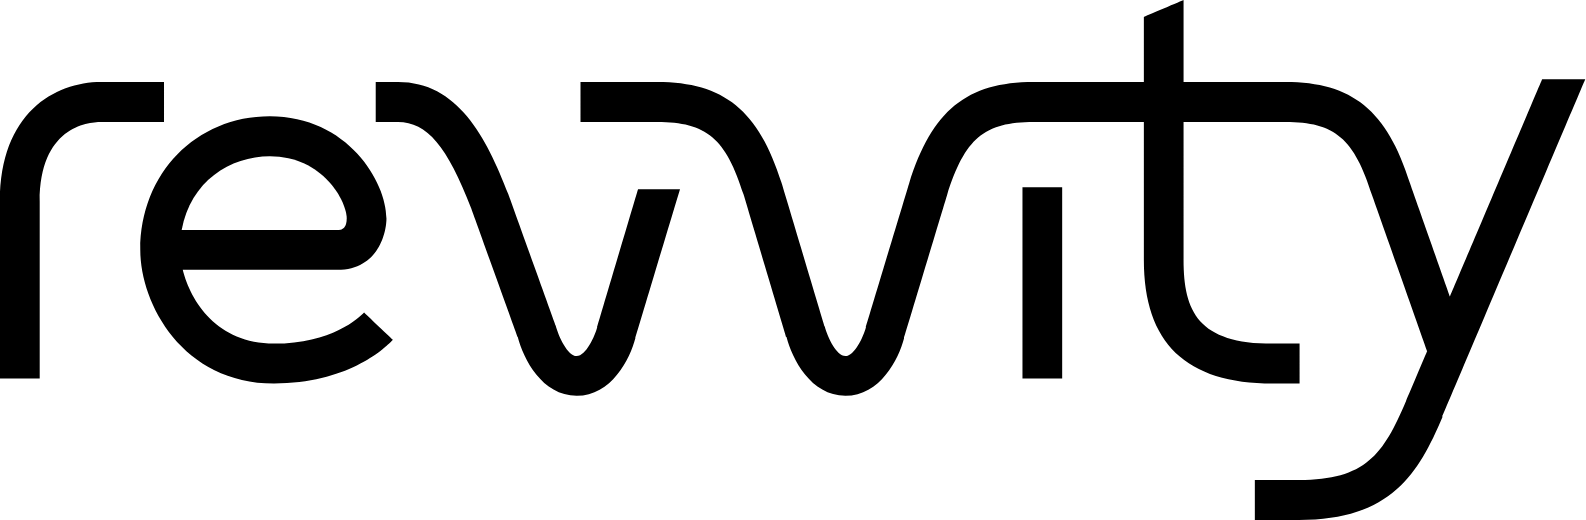 Revvity logo large (transparent PNG)